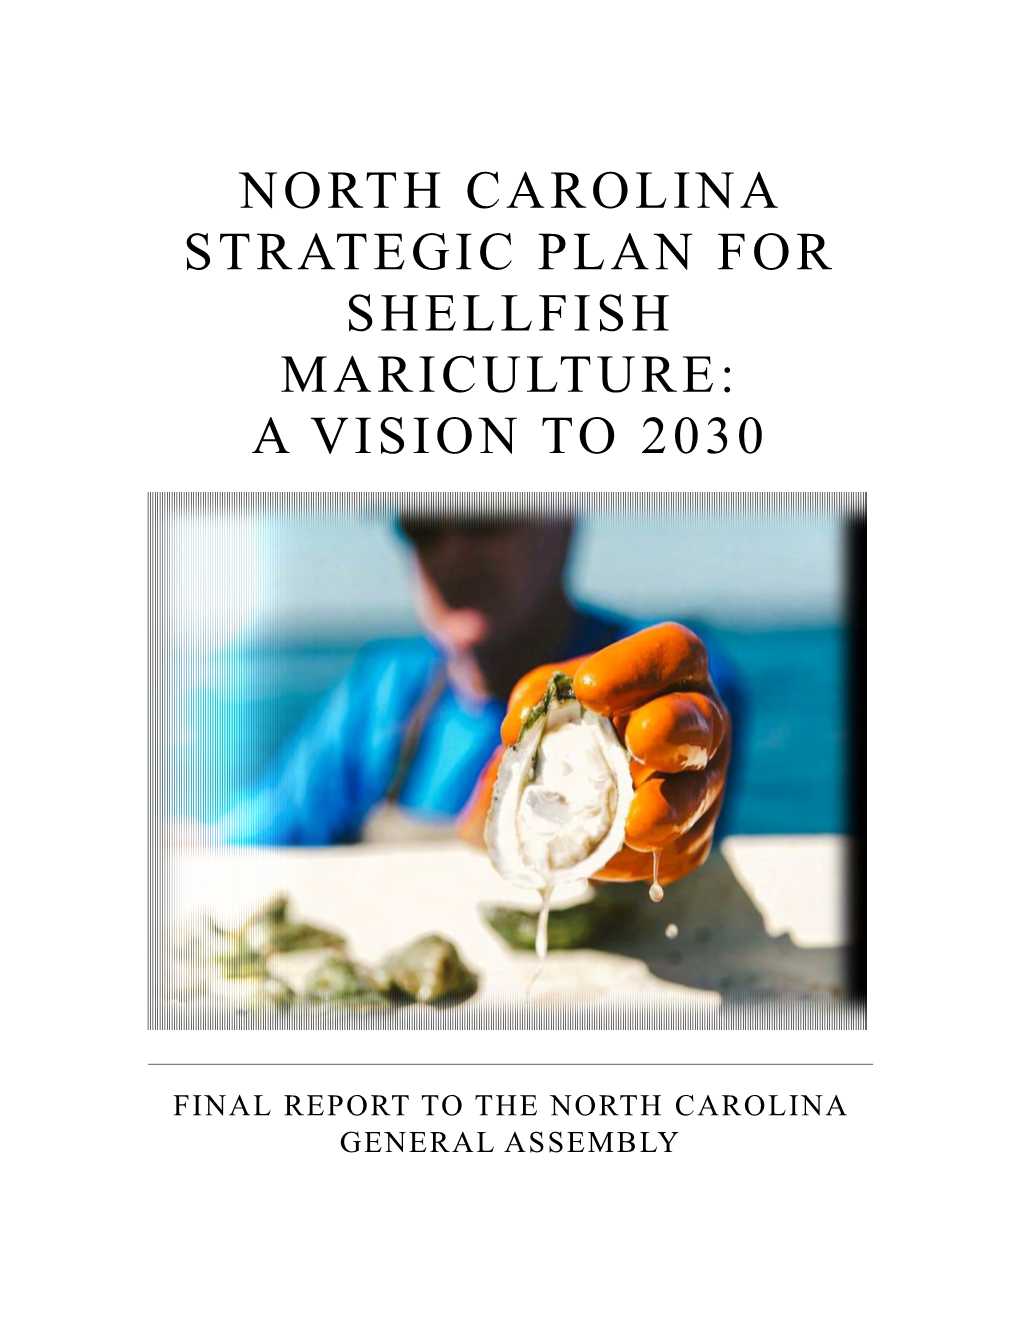 North Carolina Strategic Plan for Shellfish Mariculture: a Vision to 2030